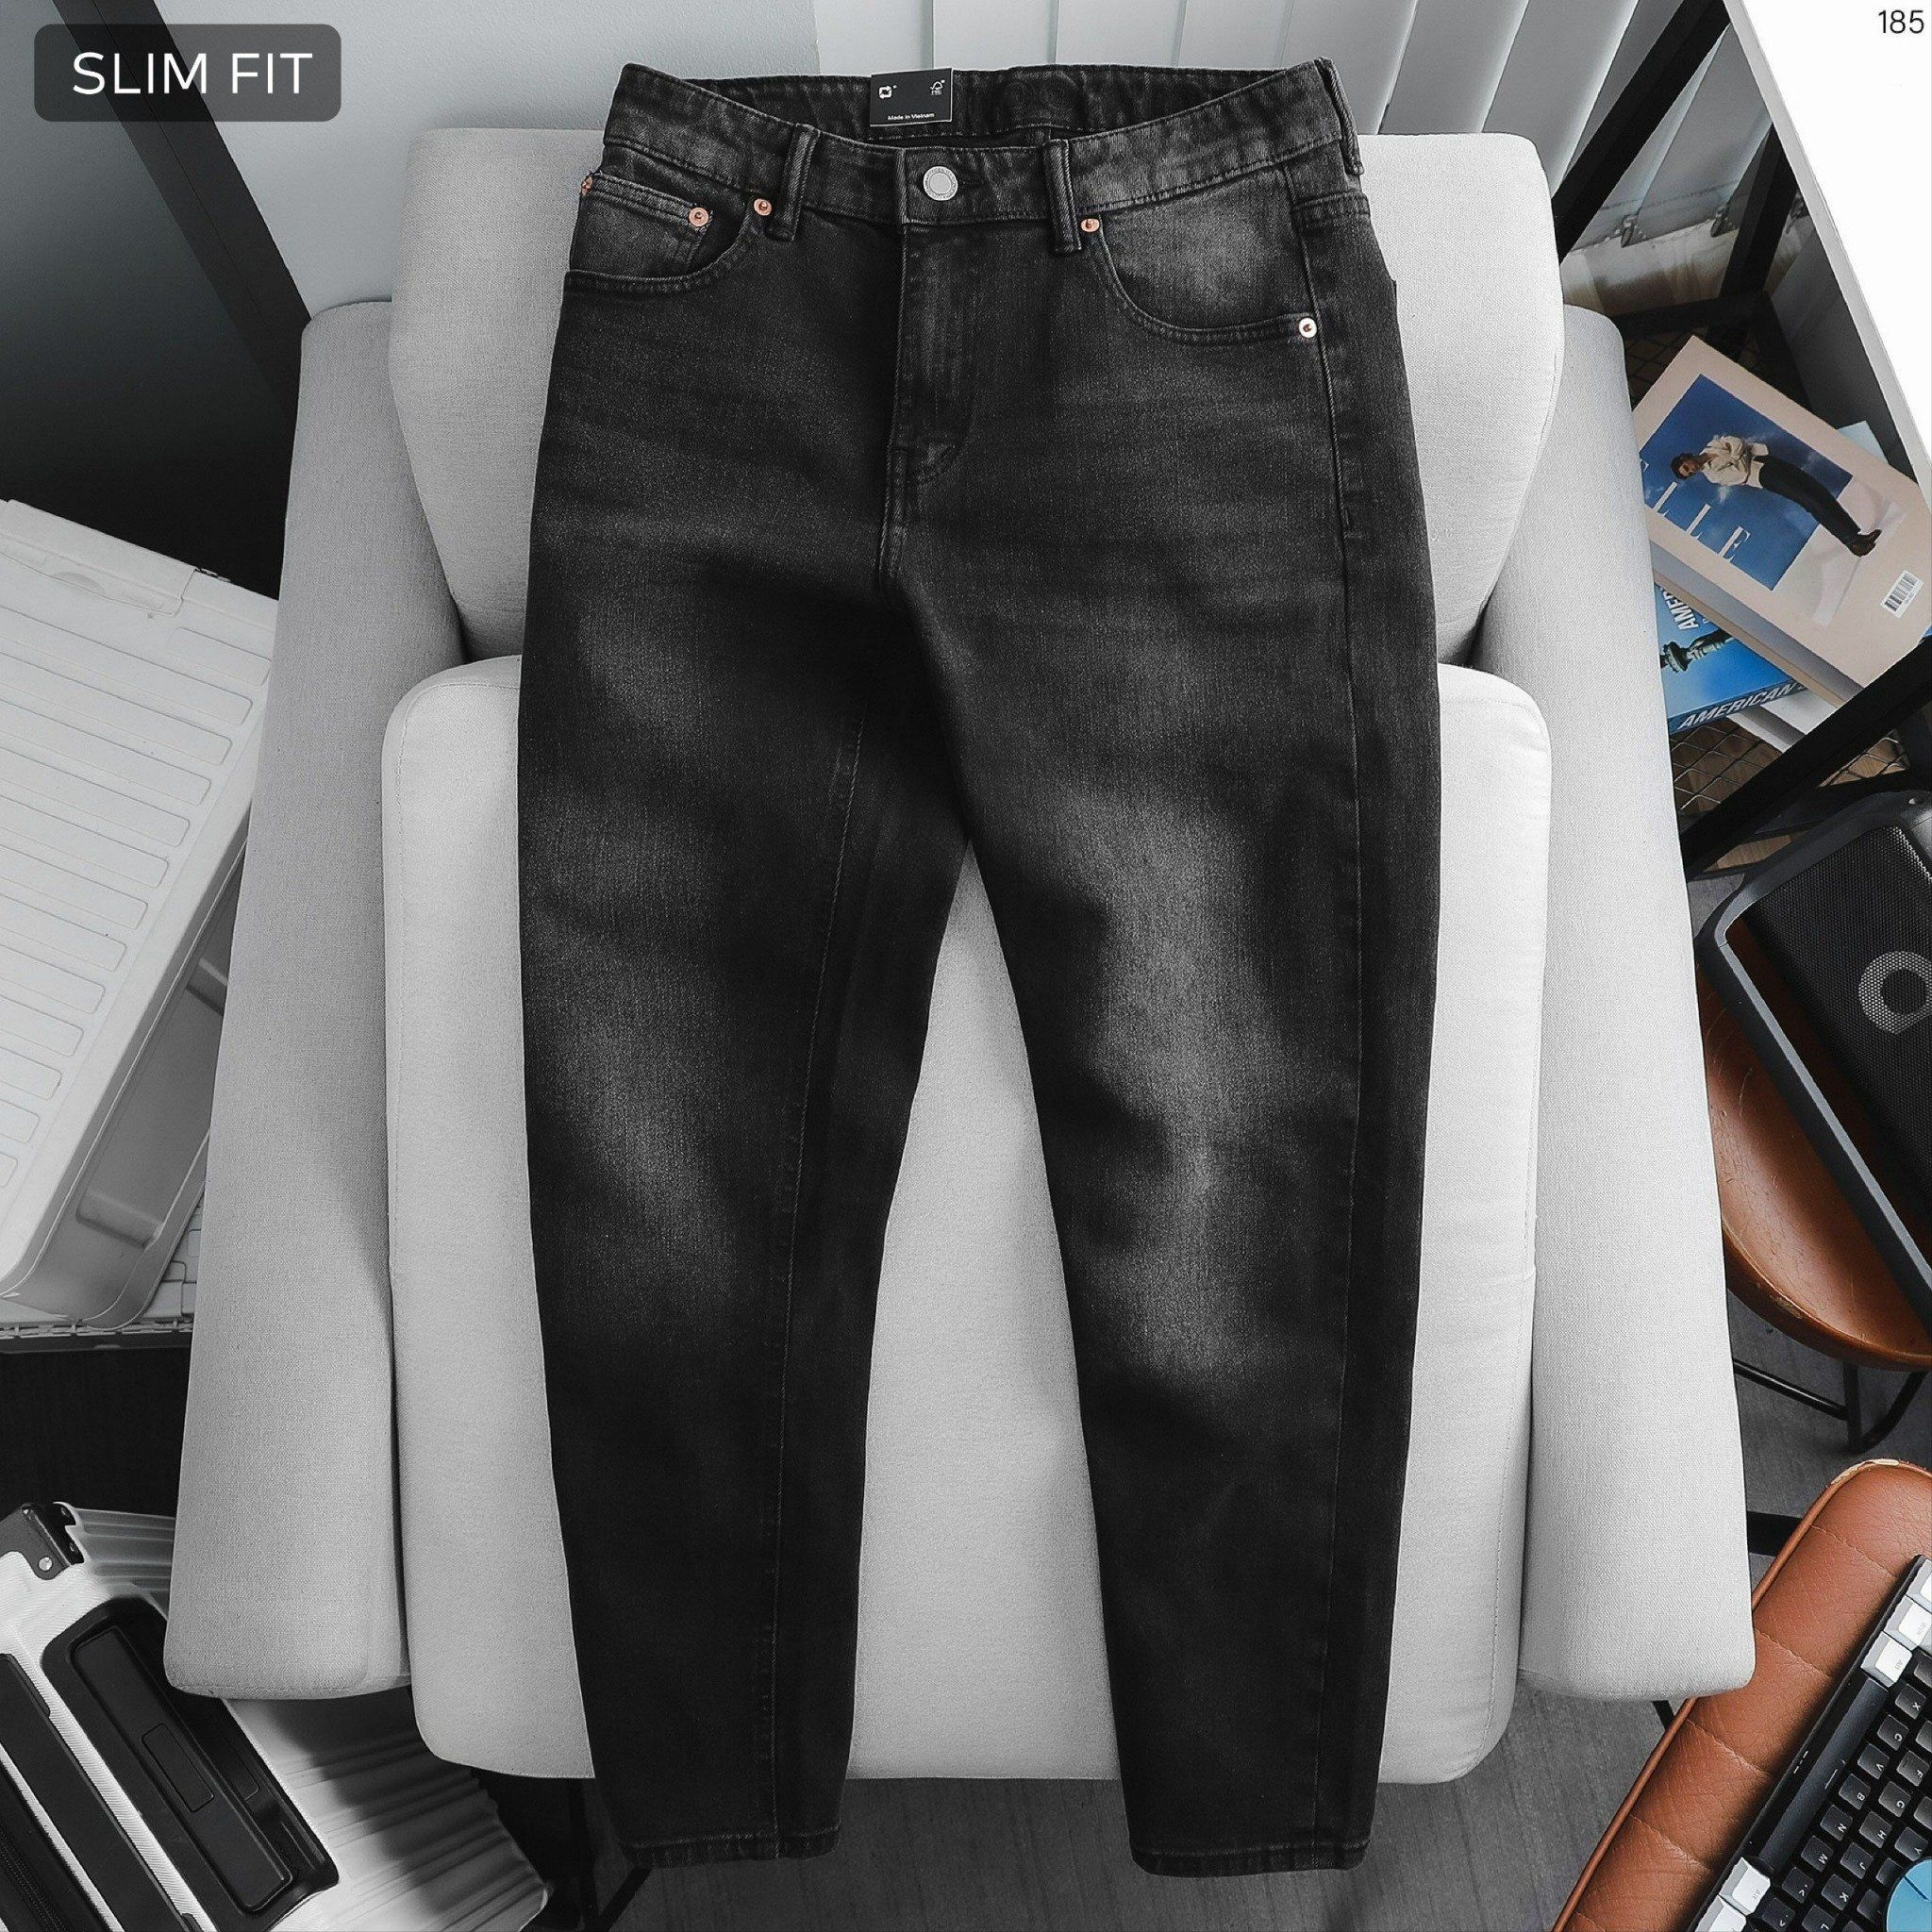 Quần Jeans ICONDENIM Black SlimFit With Contrast Rivets